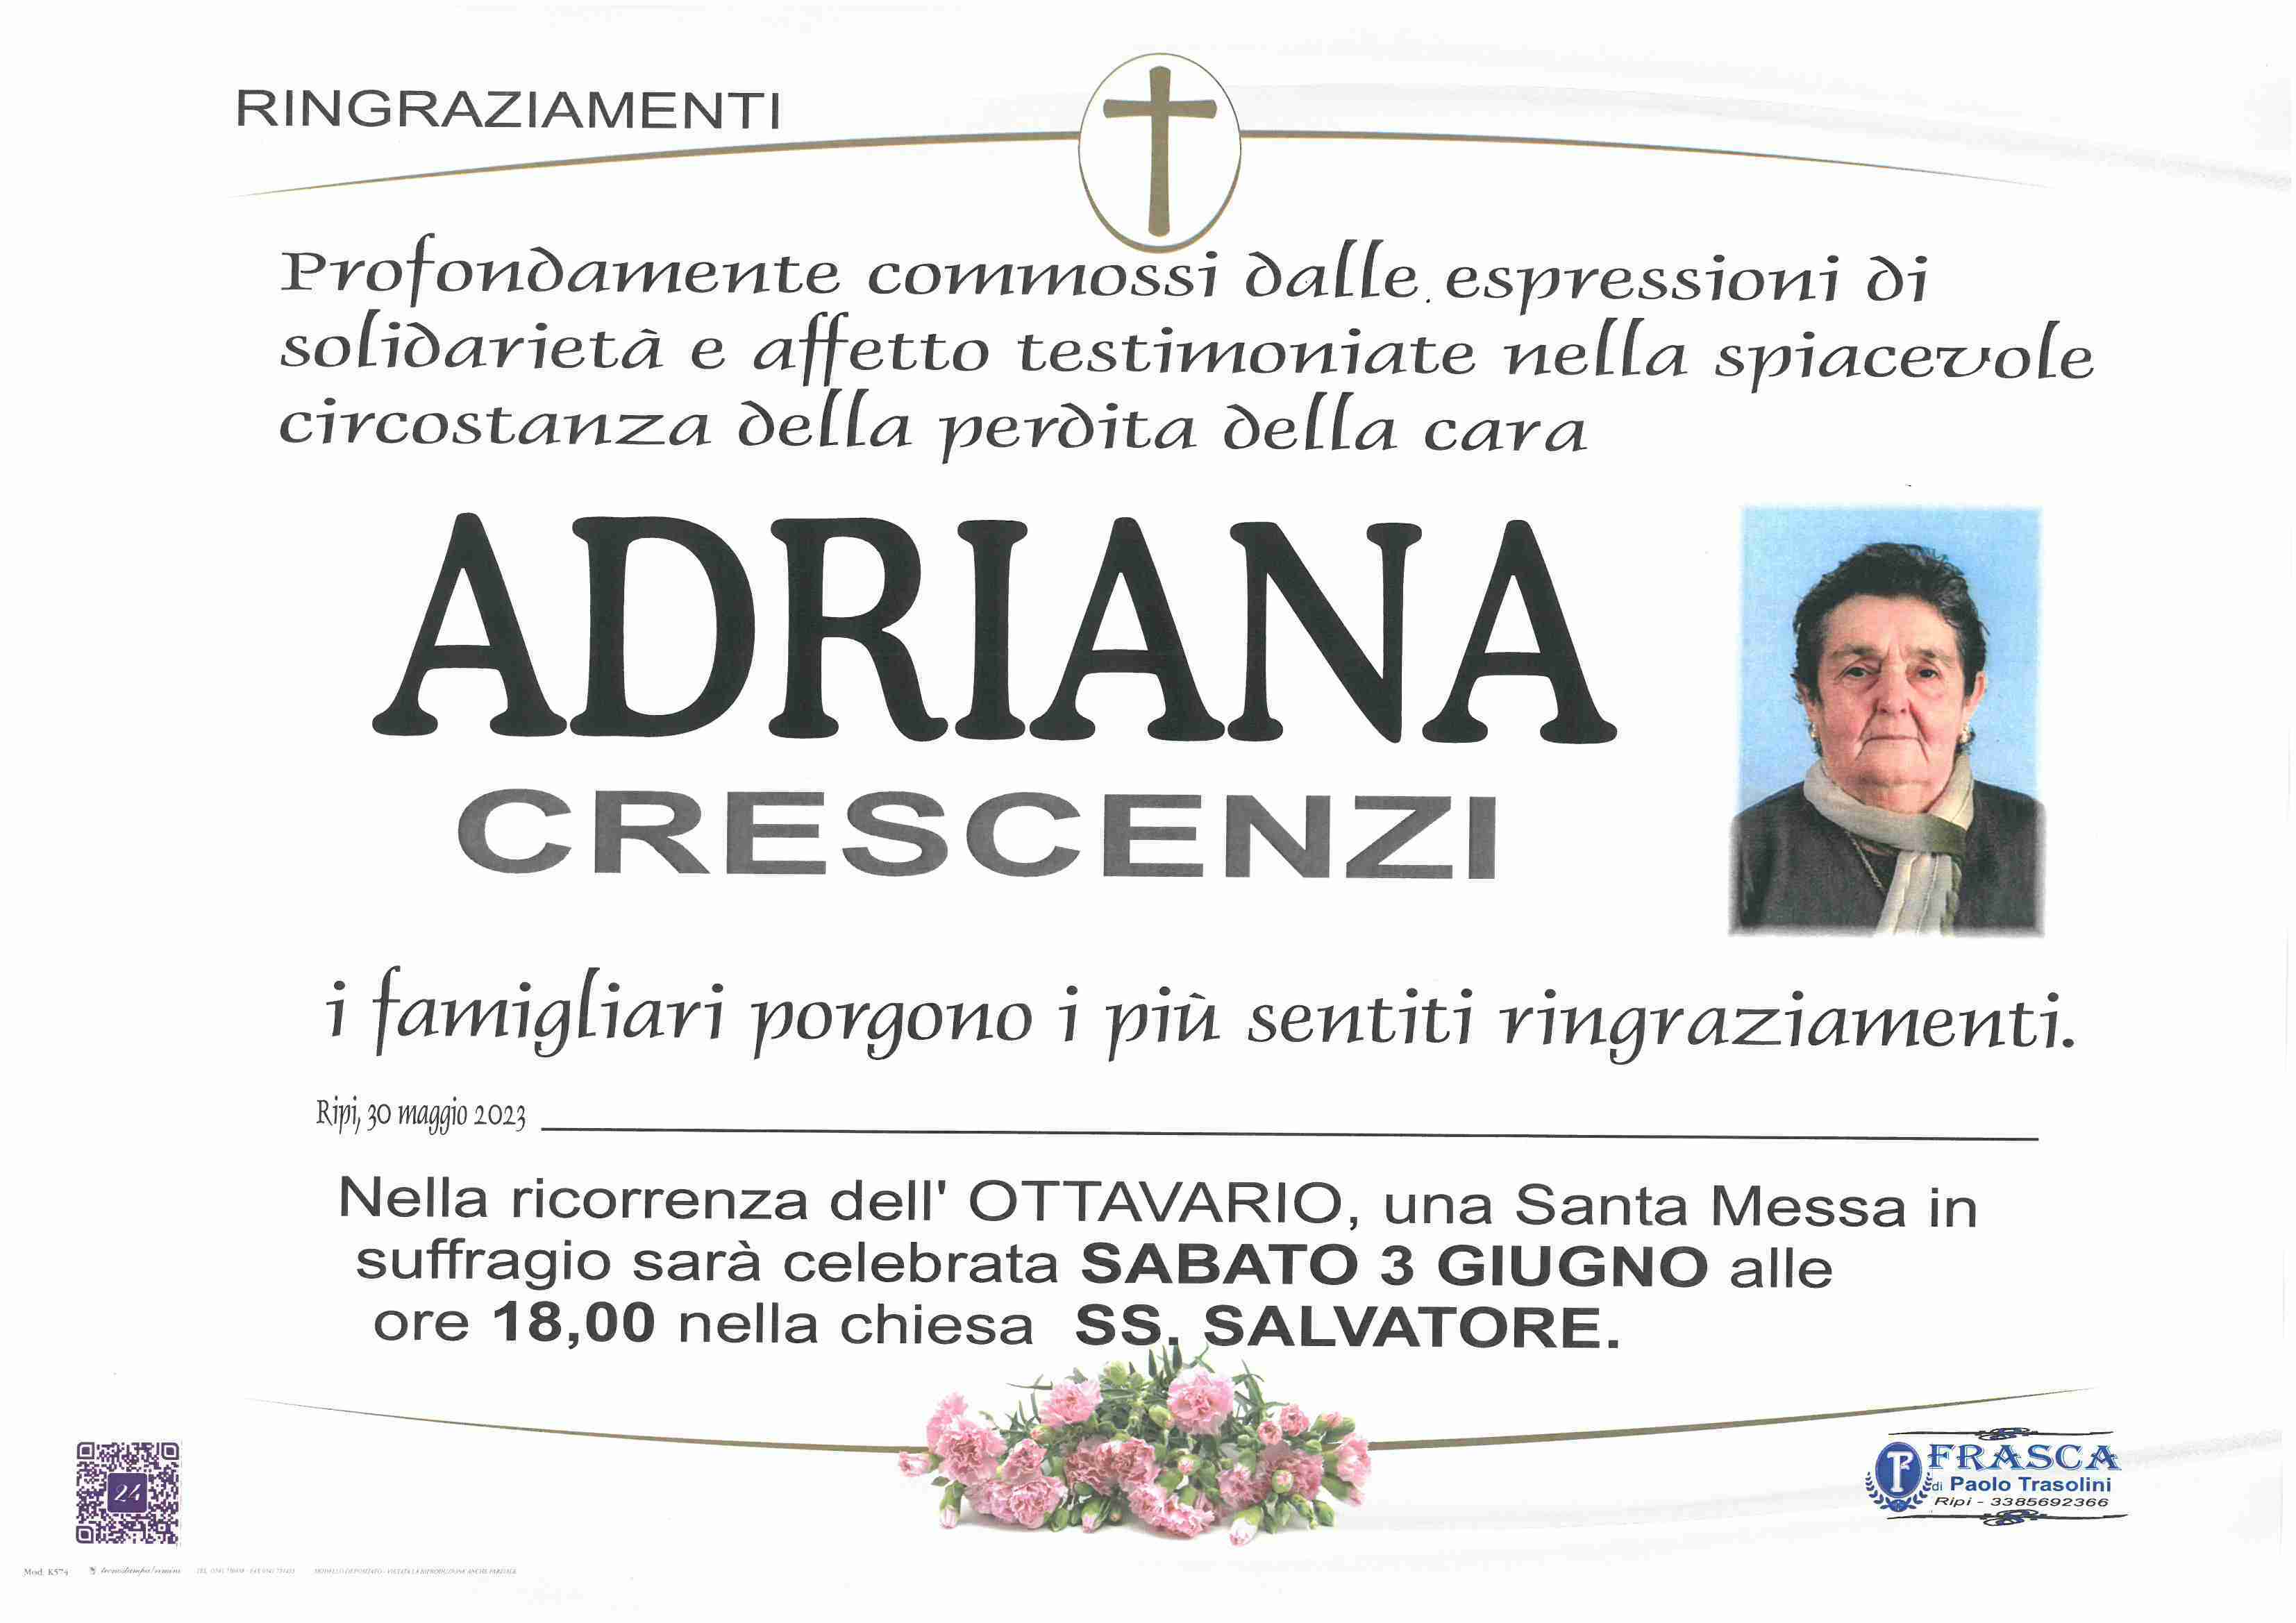 Adriana Crescenzi